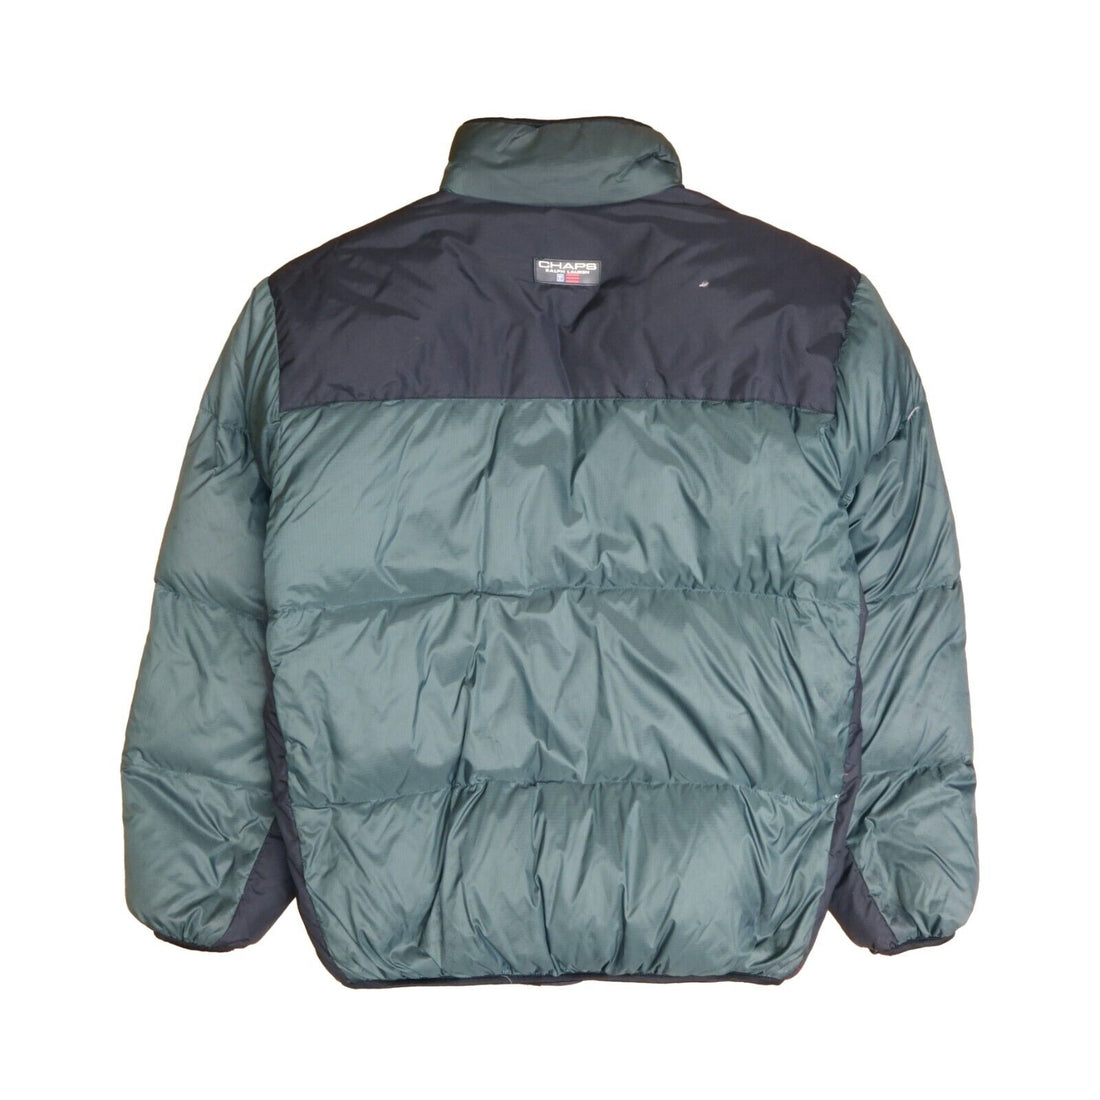 Vintage Chaps Ralph Lauren Puffer Jacket Size Medium Green